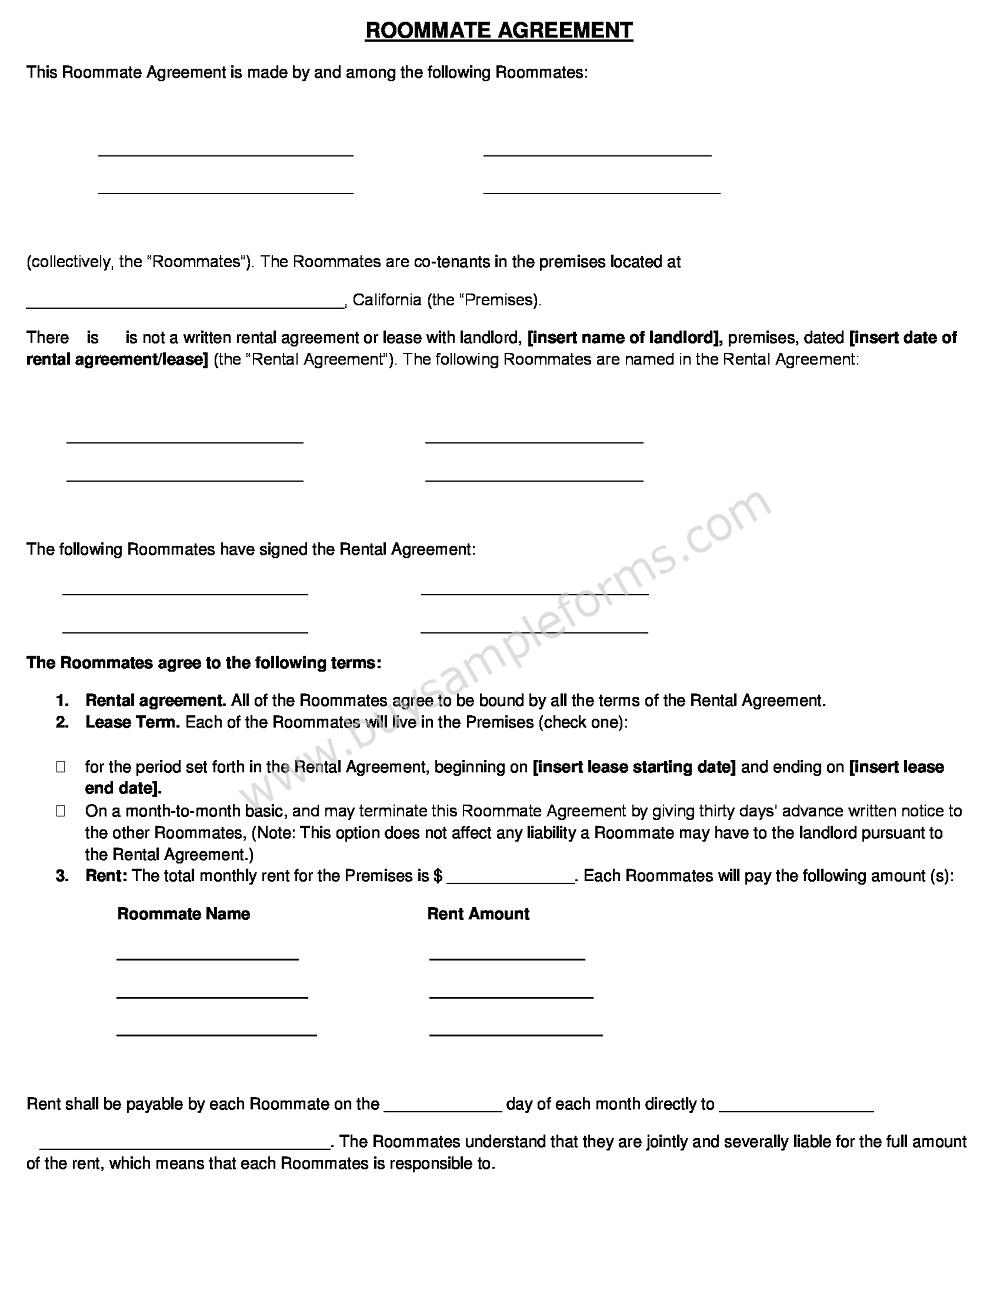 Roommate Agreement Template Word Roommate Rental Agreement Form Template Word Doc Sample Forms